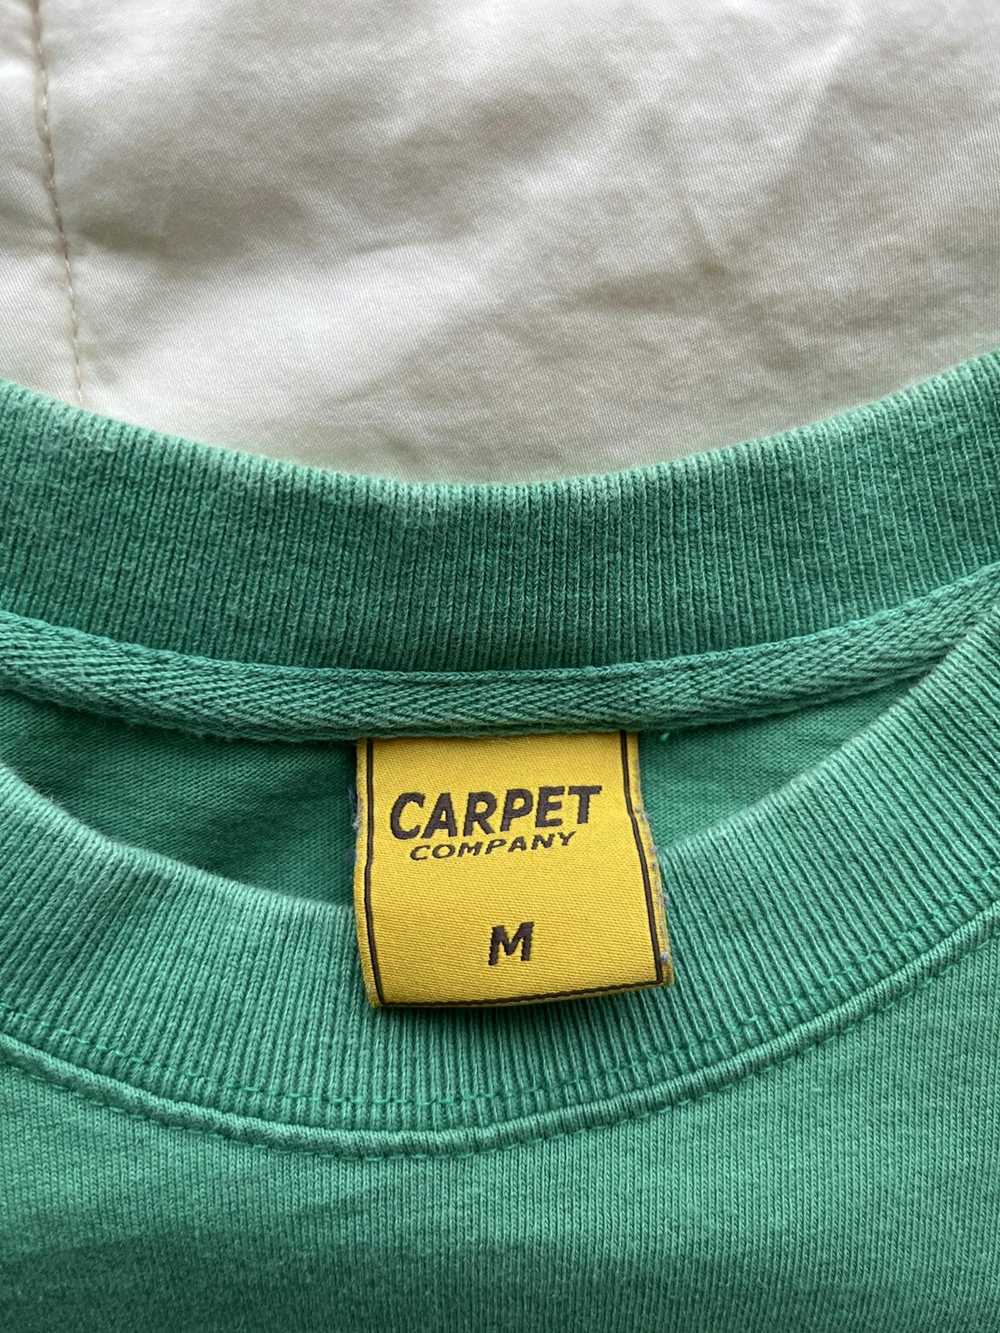 Carpet Carpet Company shirt - image 2